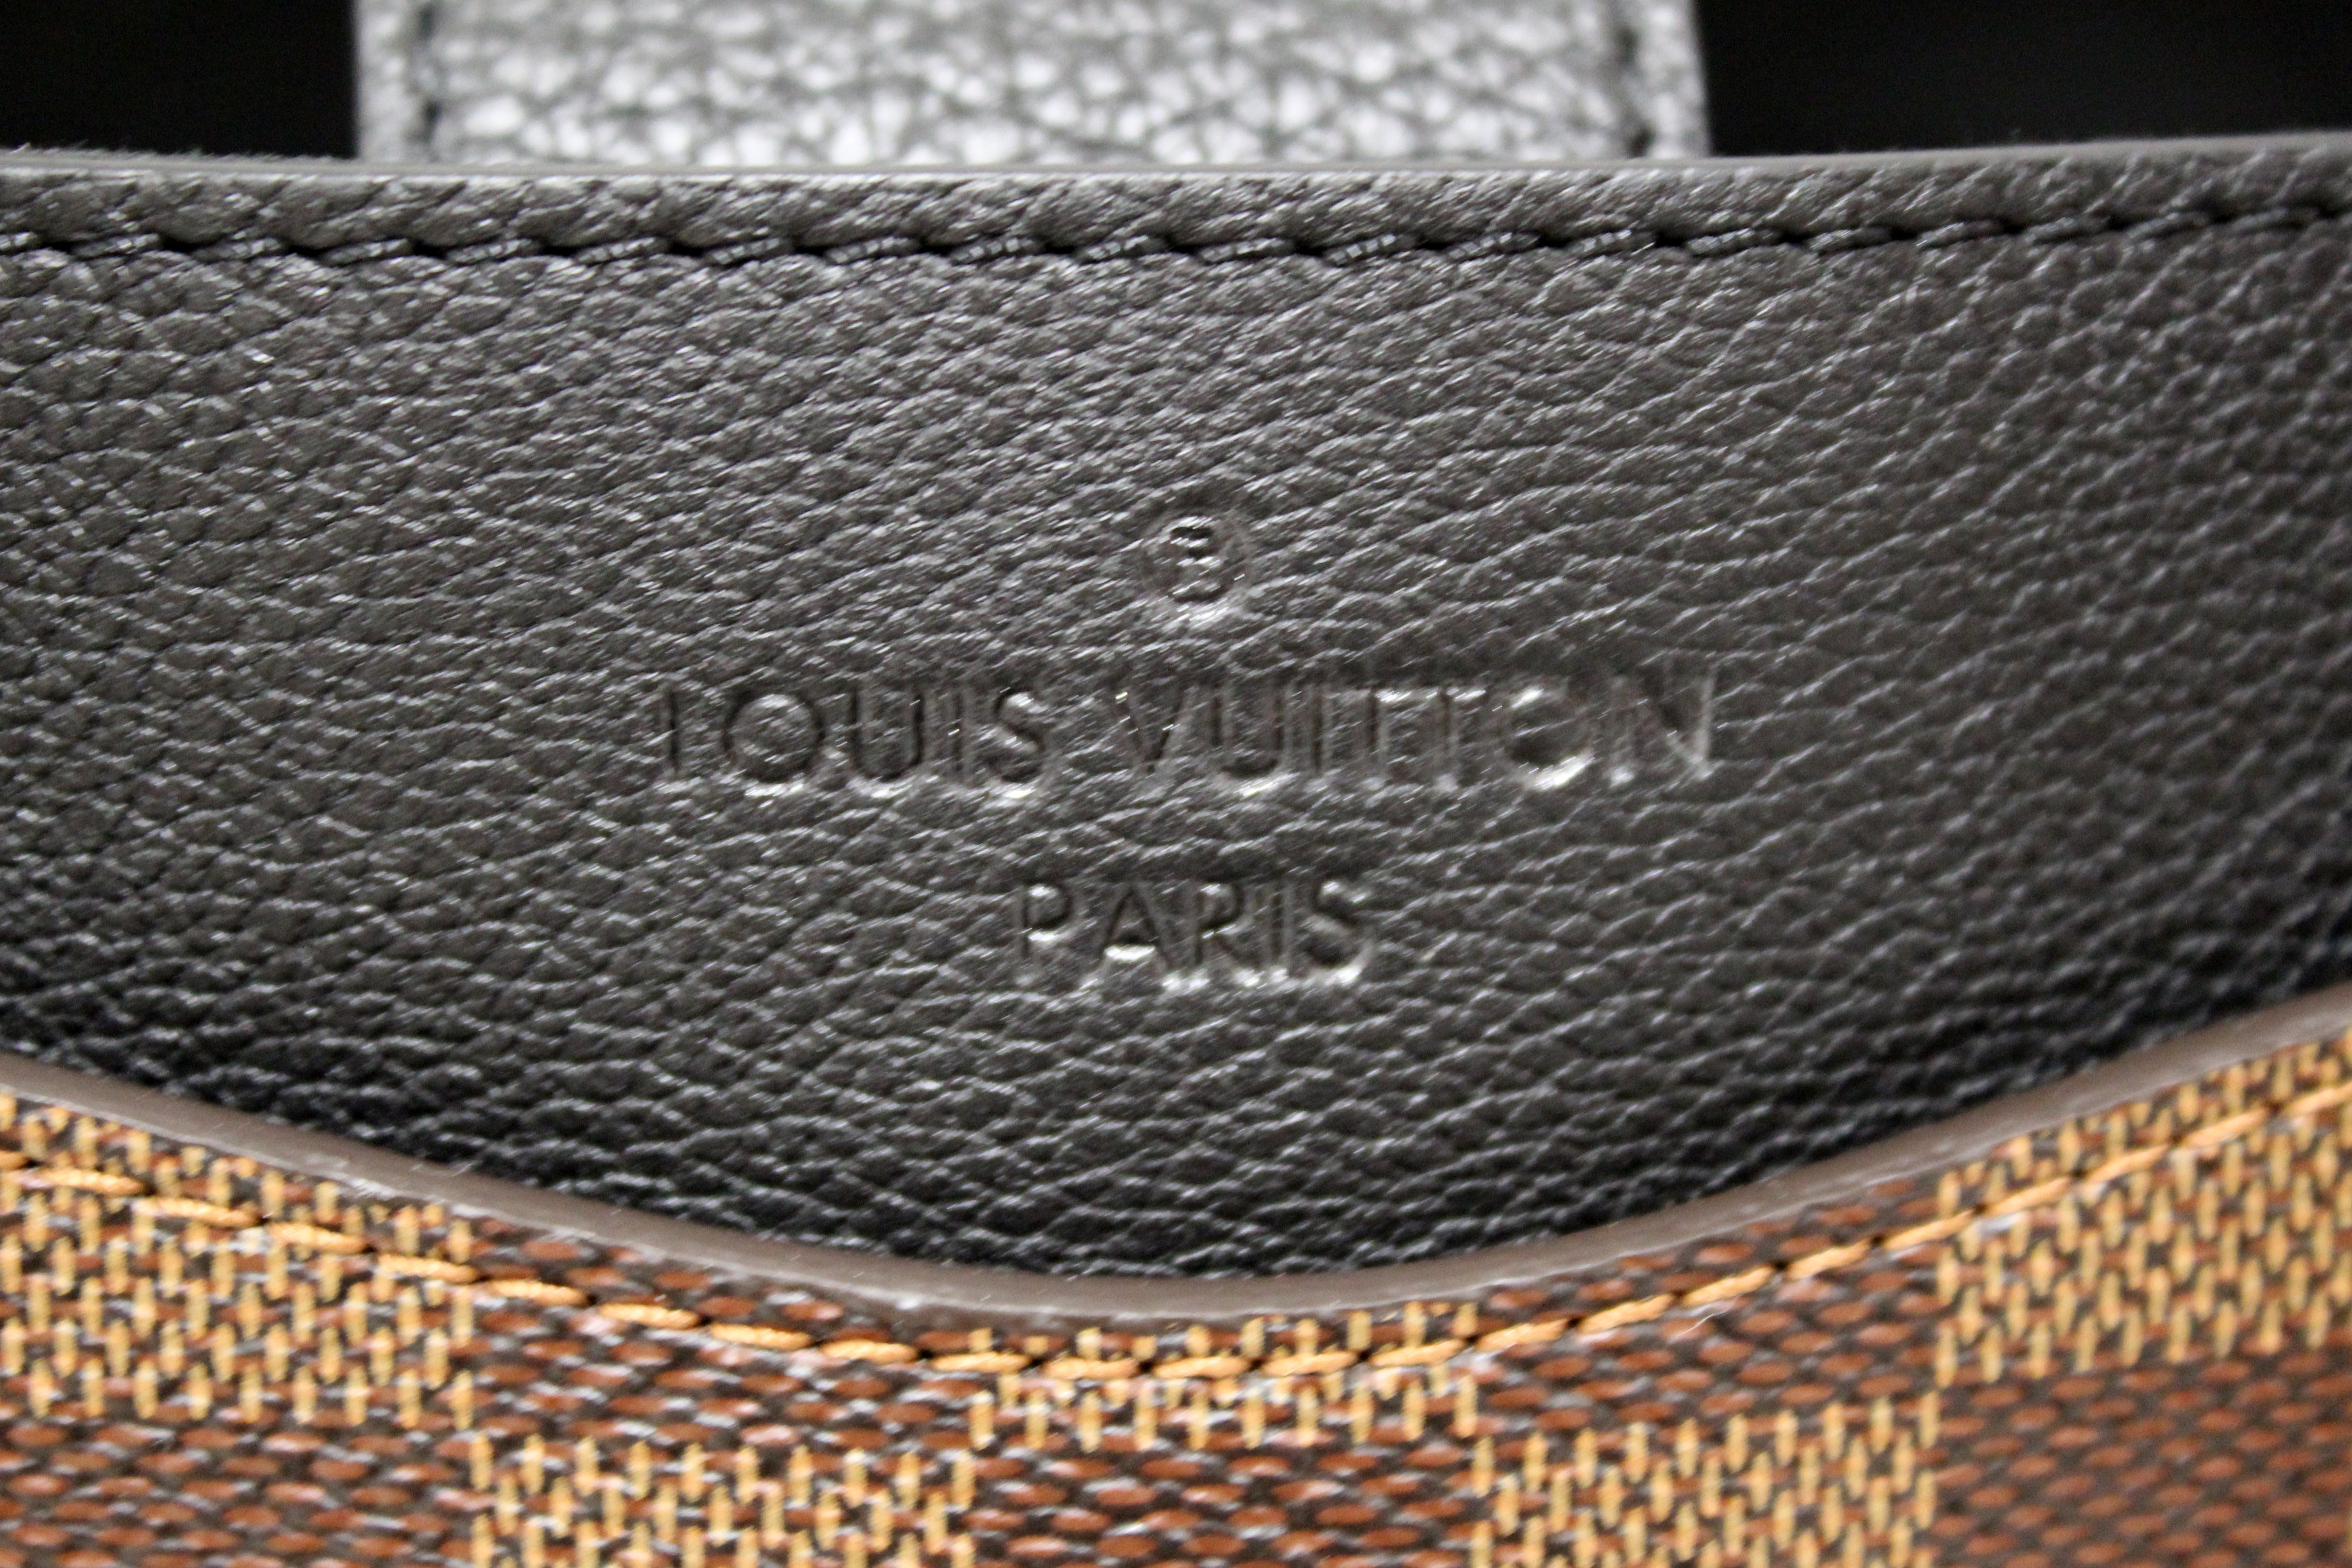 Louis Vuitton Damier Ebene Canvas LV Riverside — Edit38 NY